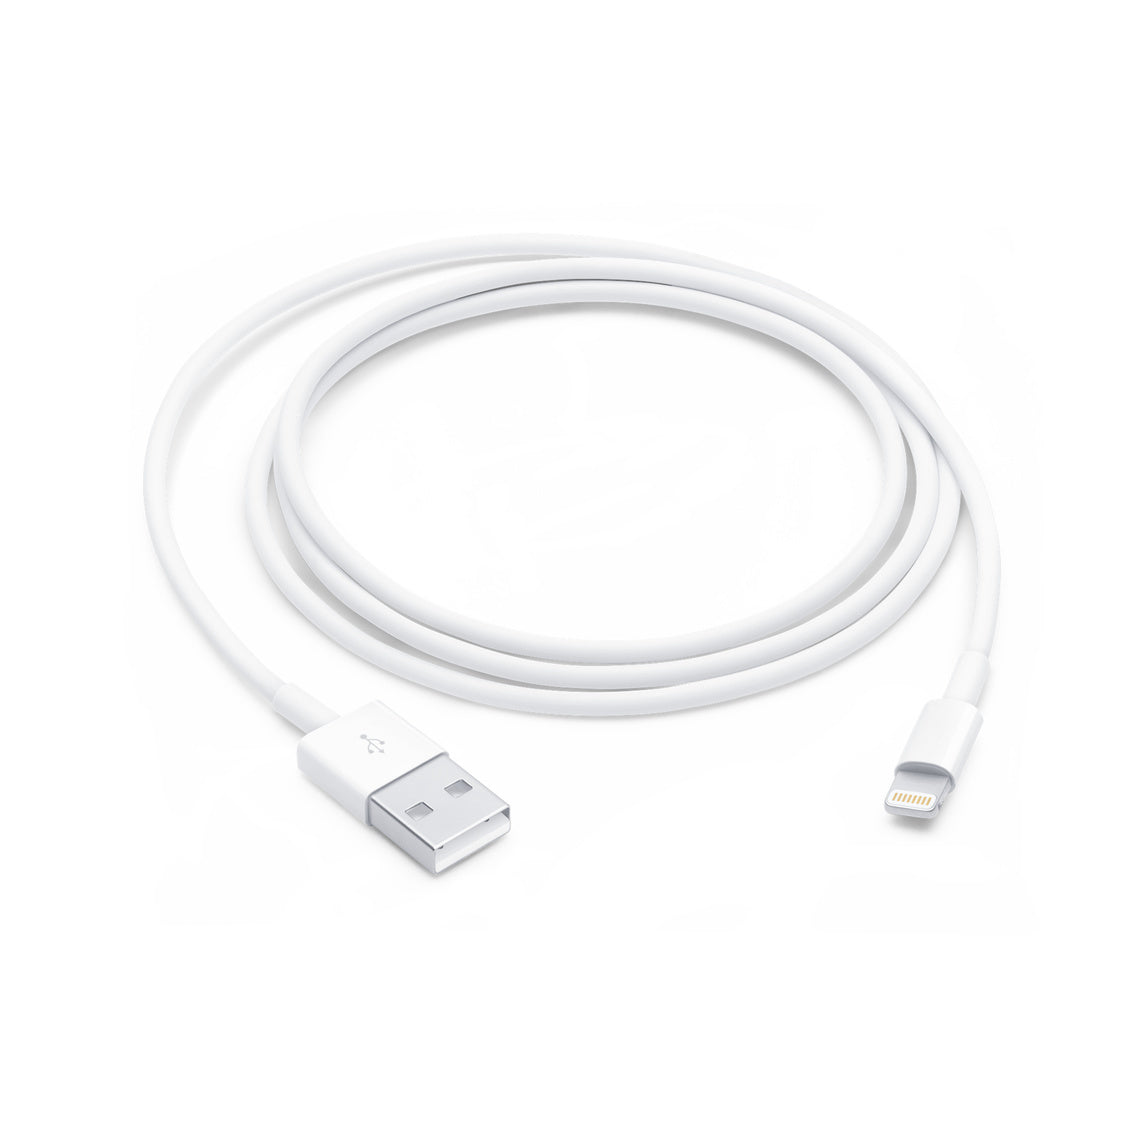 Lightning to USB Cable (1m) - iStore Botswana Online